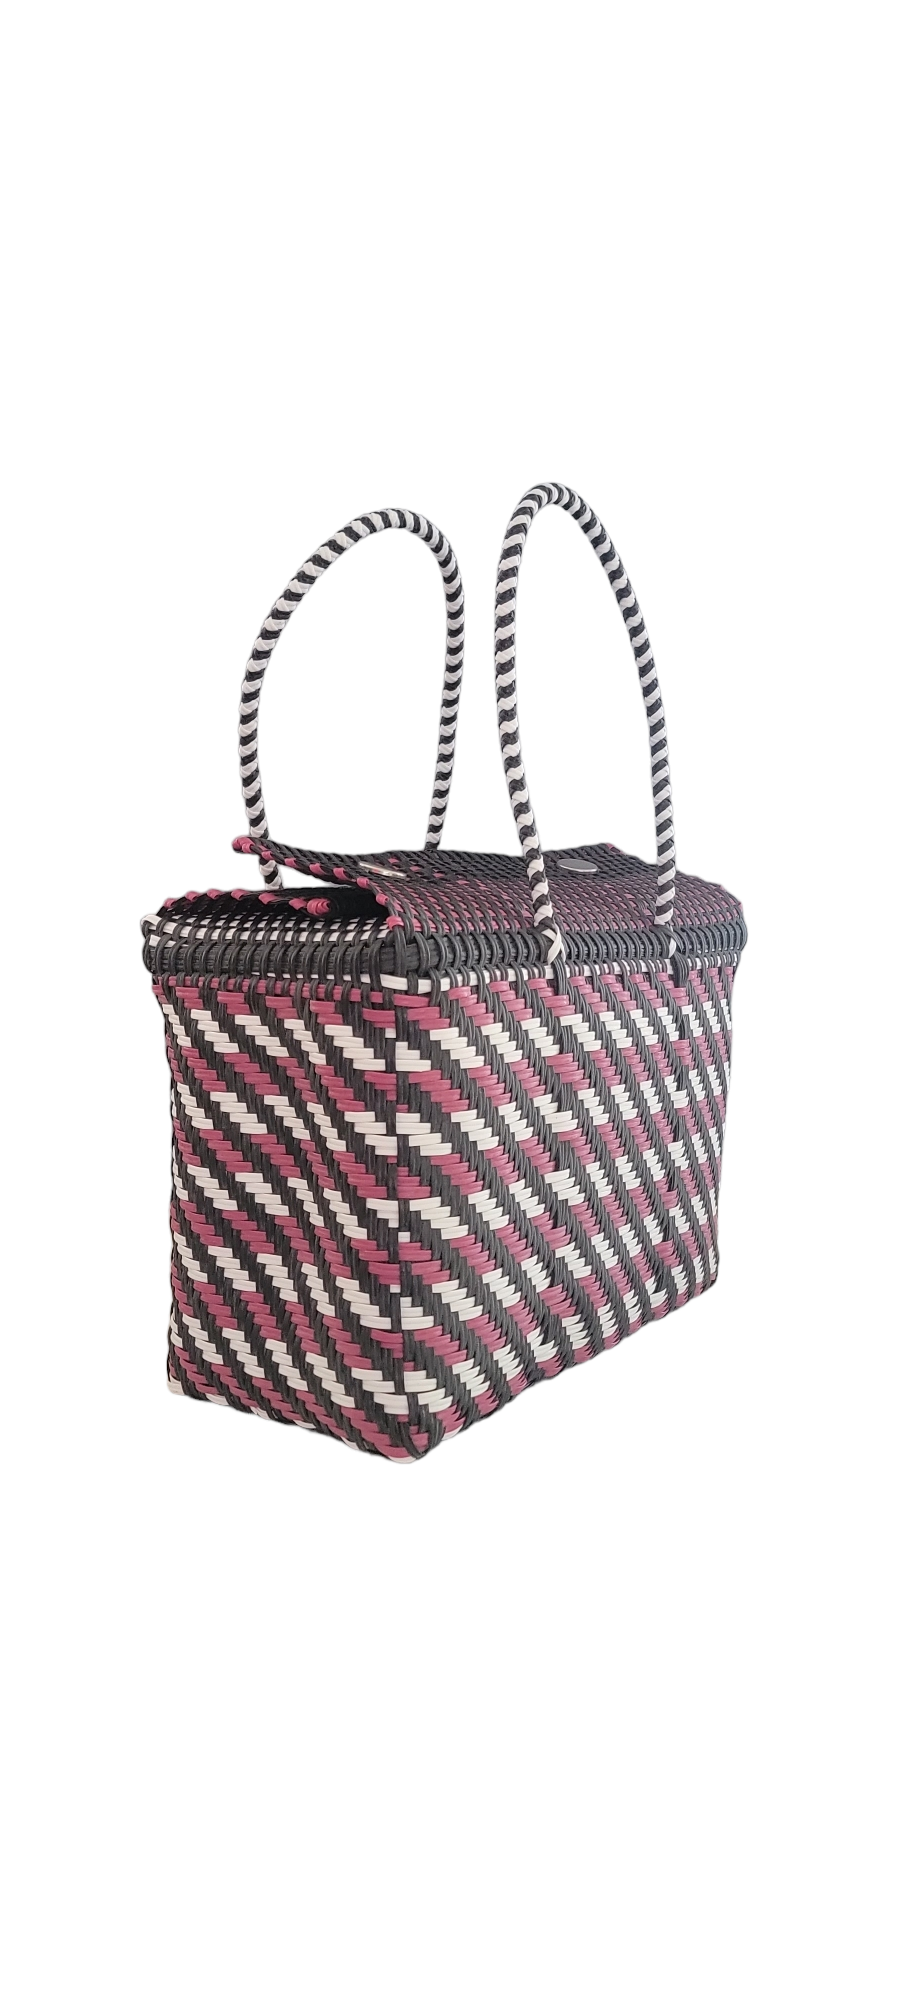 Be Praia | Black, Fushia & White XL Basket | Eco-Friendly Handwoven Bag